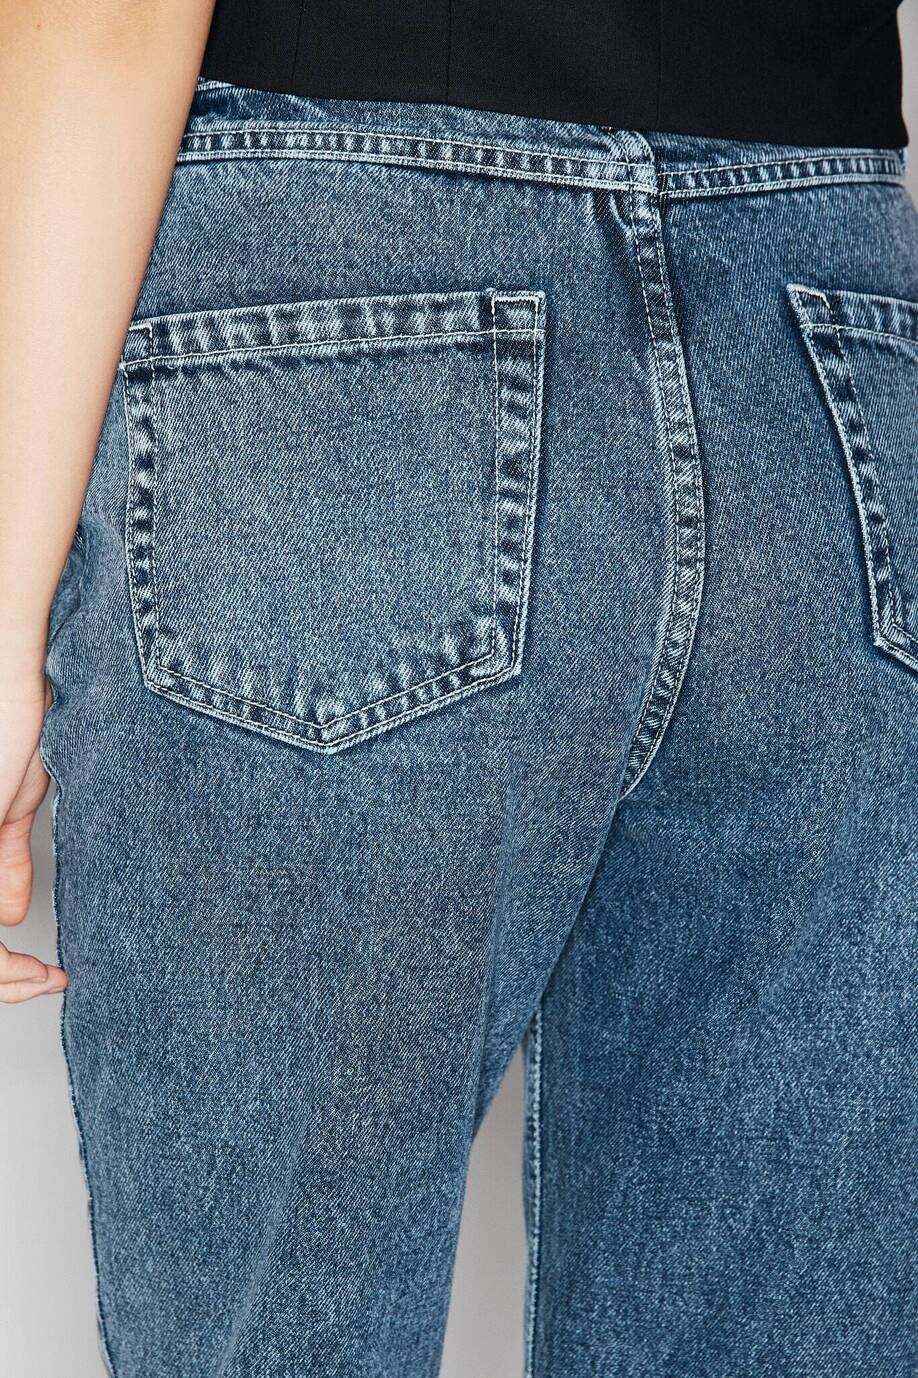 CINDY jeans